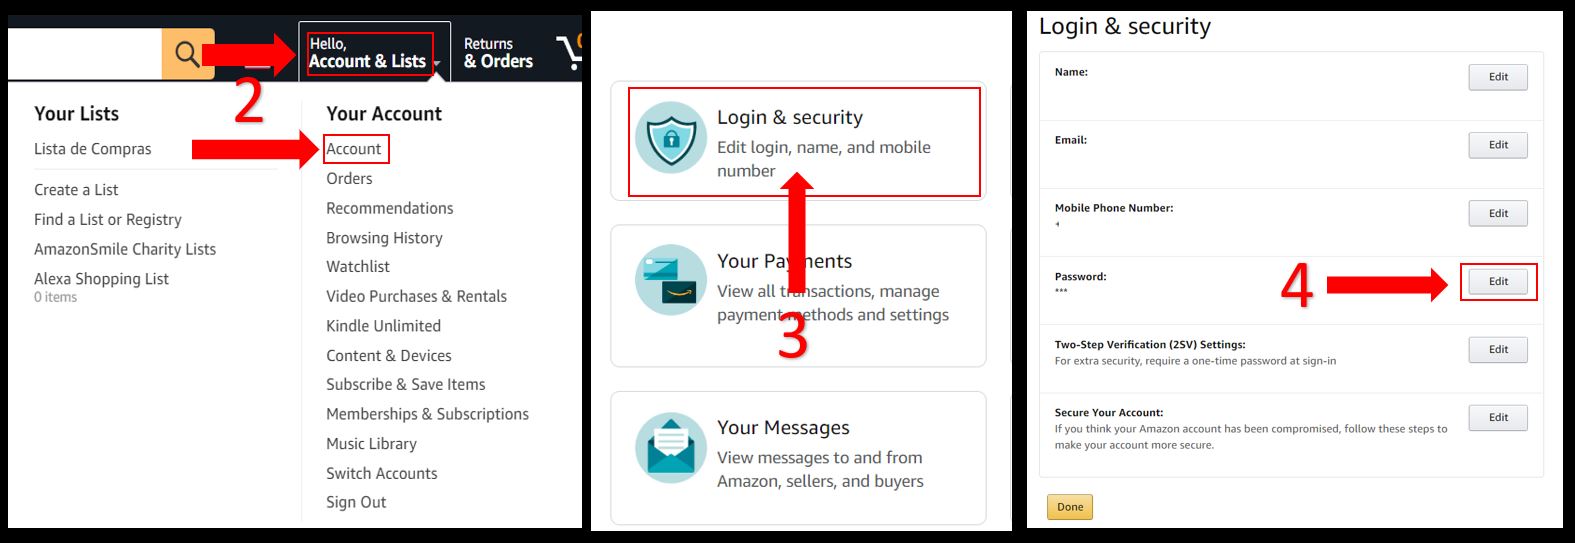 Change your password on Amazon